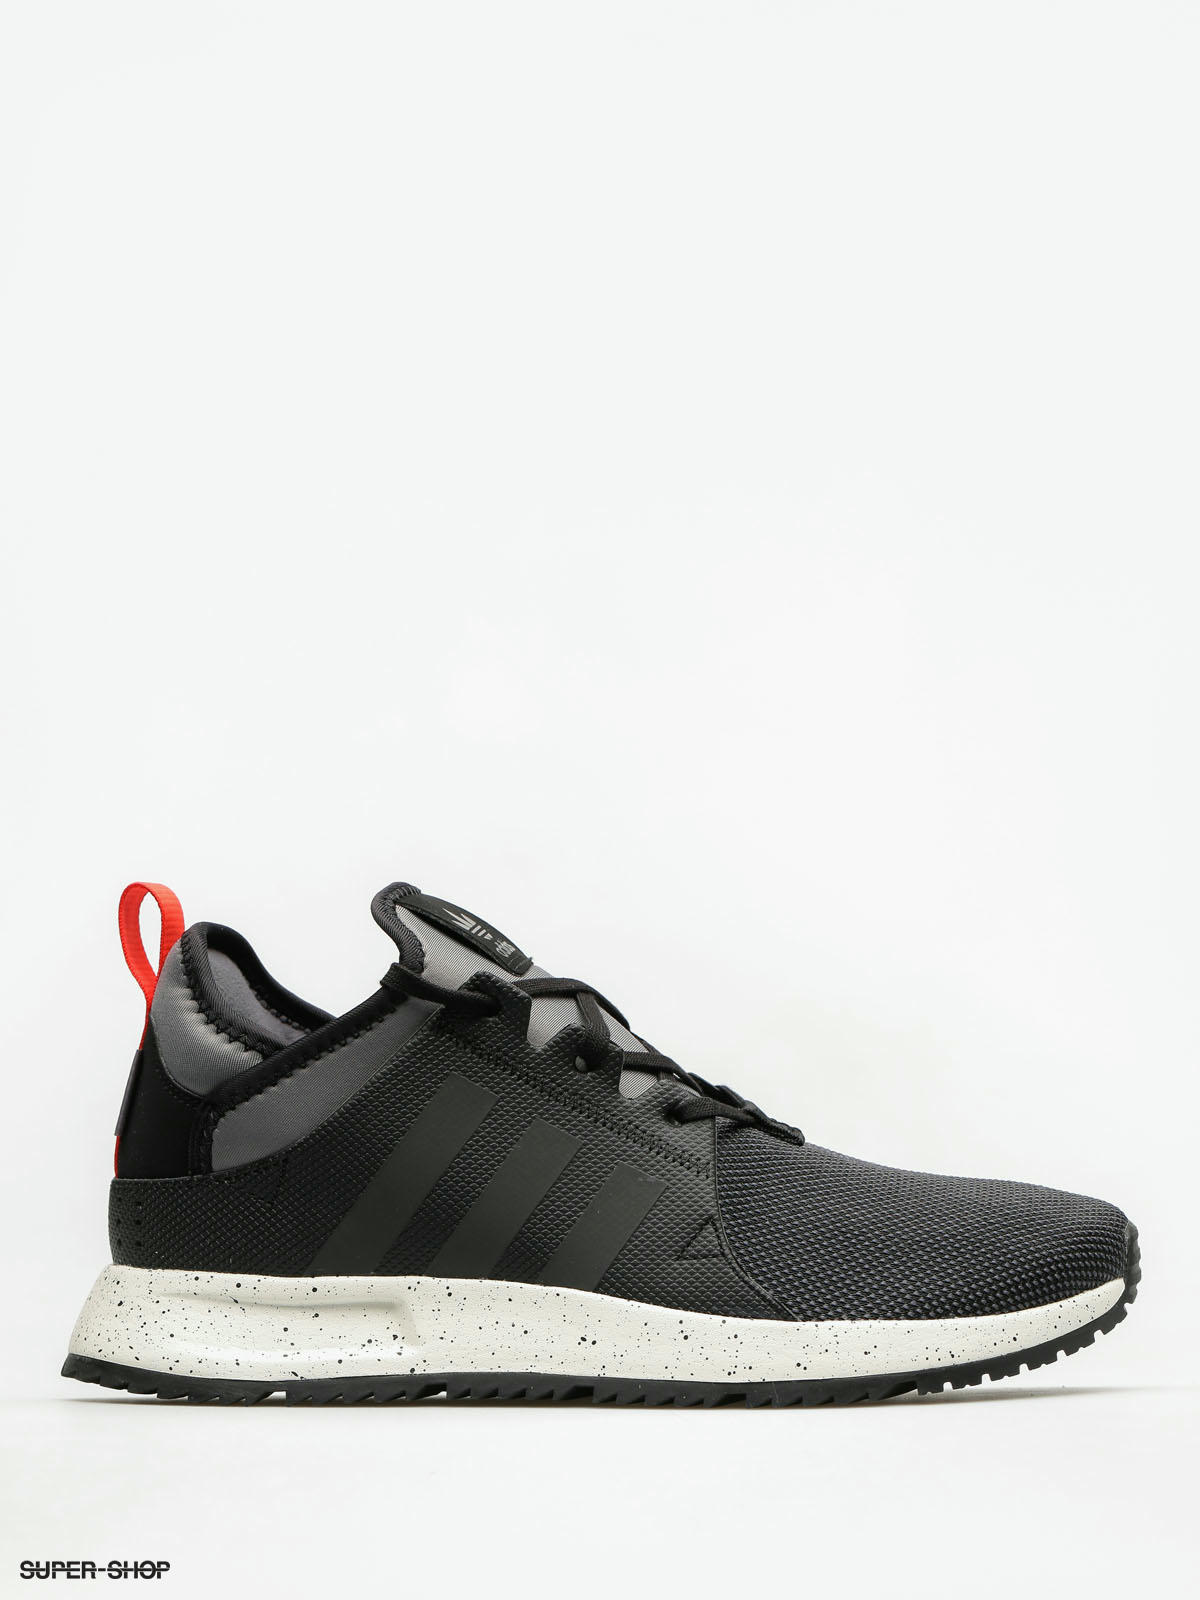 adidas X Plr Sneakerboot (cblack/cblack/grefiv)